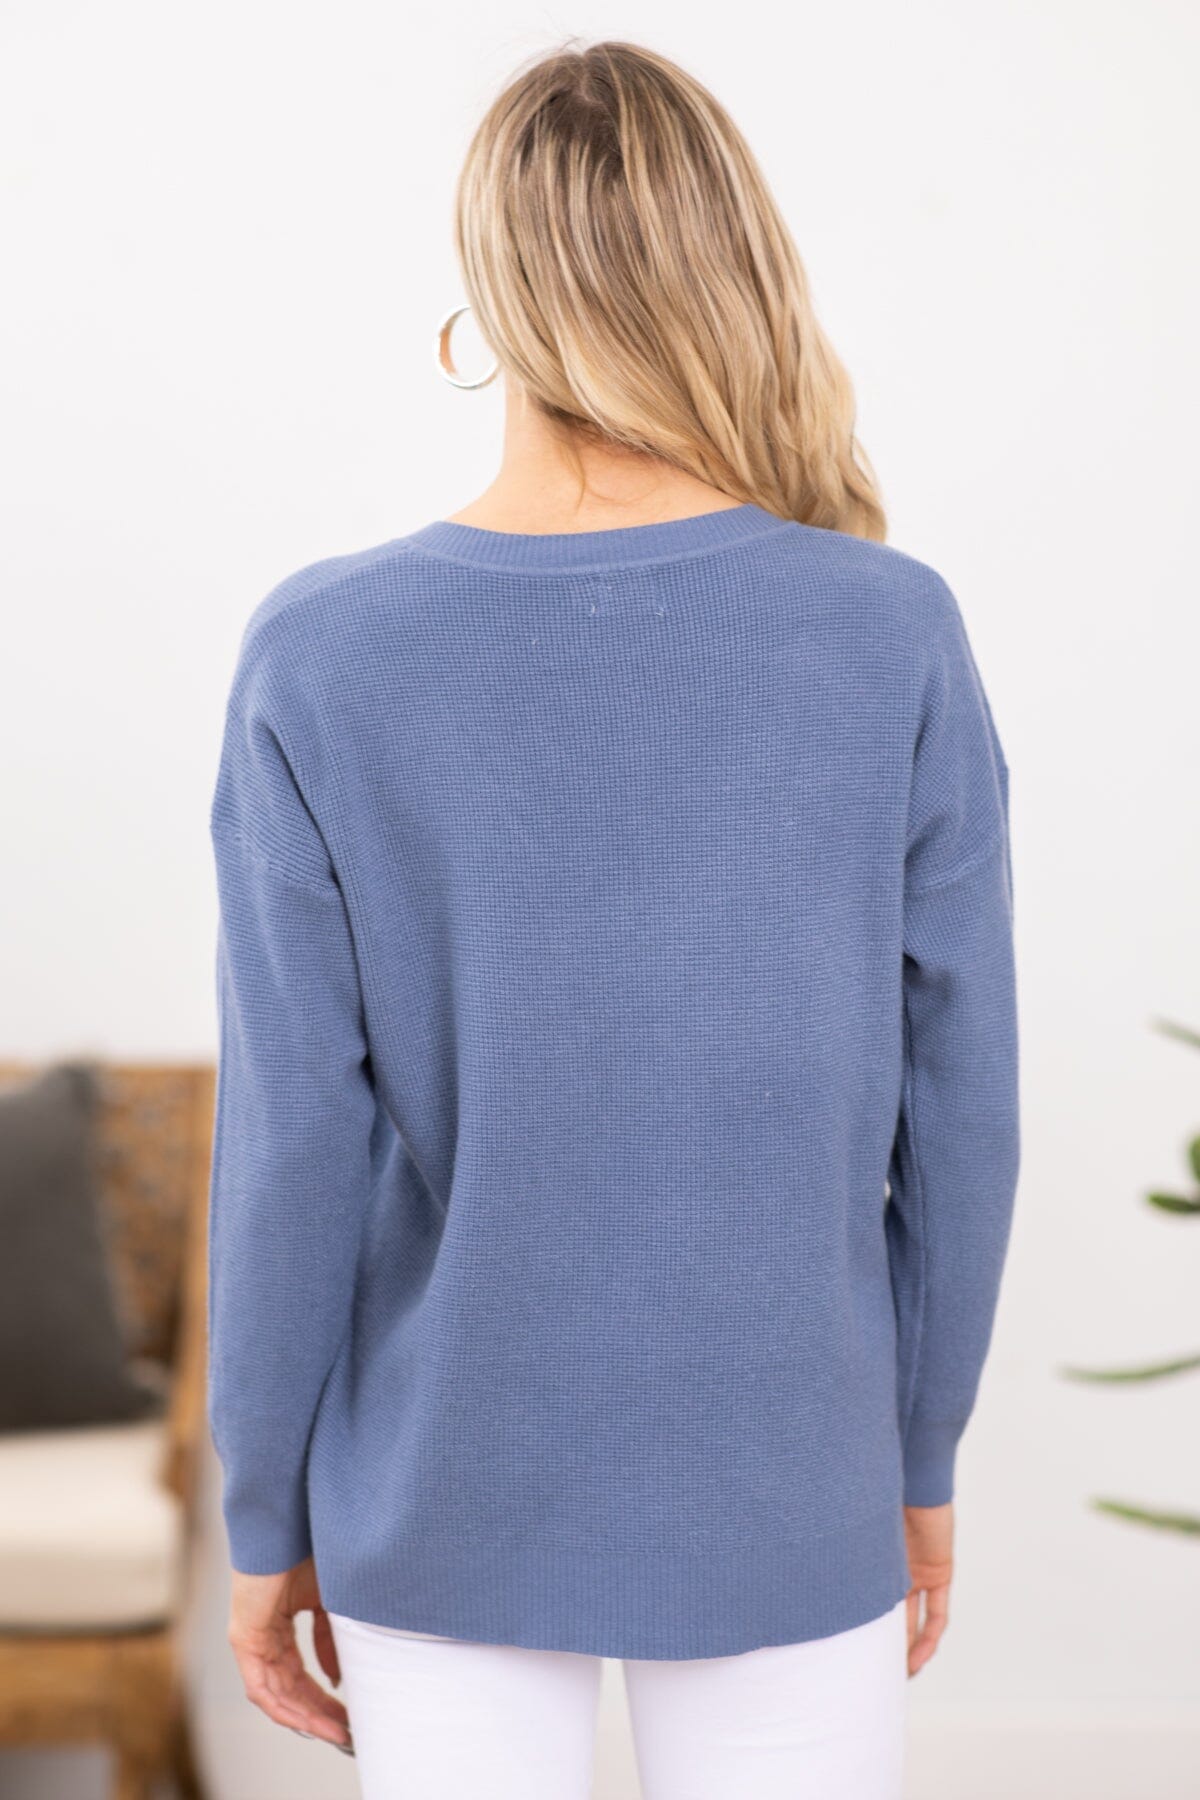 Slate Blue Drop Shoulder Lightweight Sweater - Filly Flair